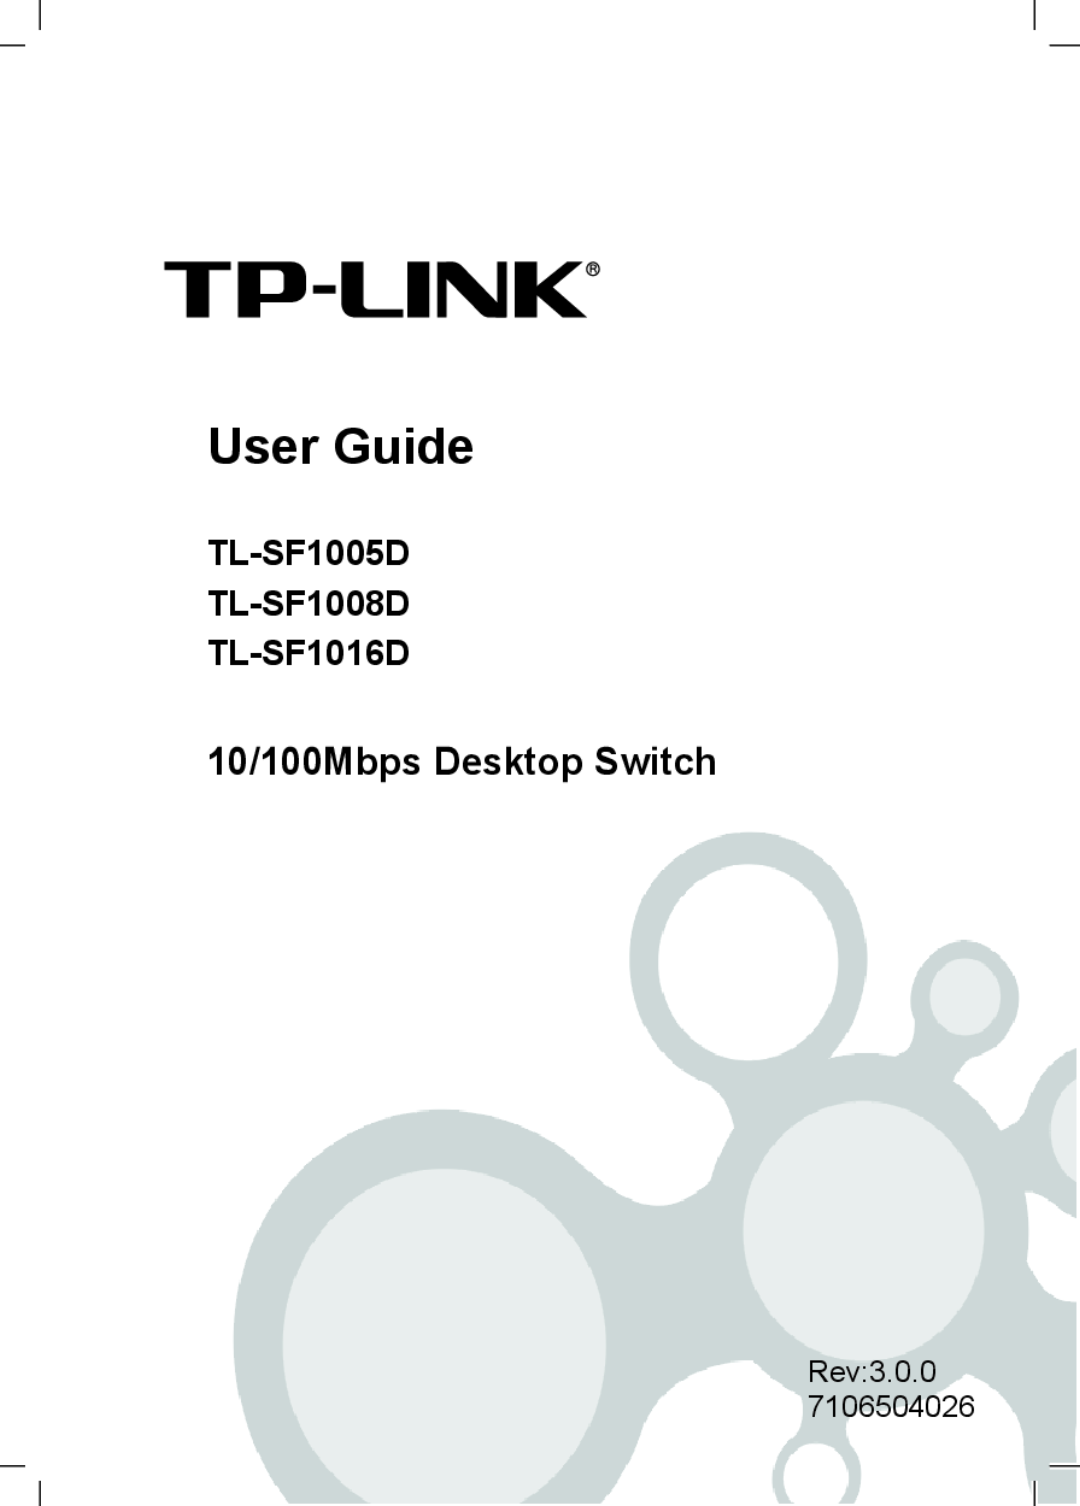 TP-Link TL-SF1016D manual PORT 10/100 DESKTOP SWITCH 